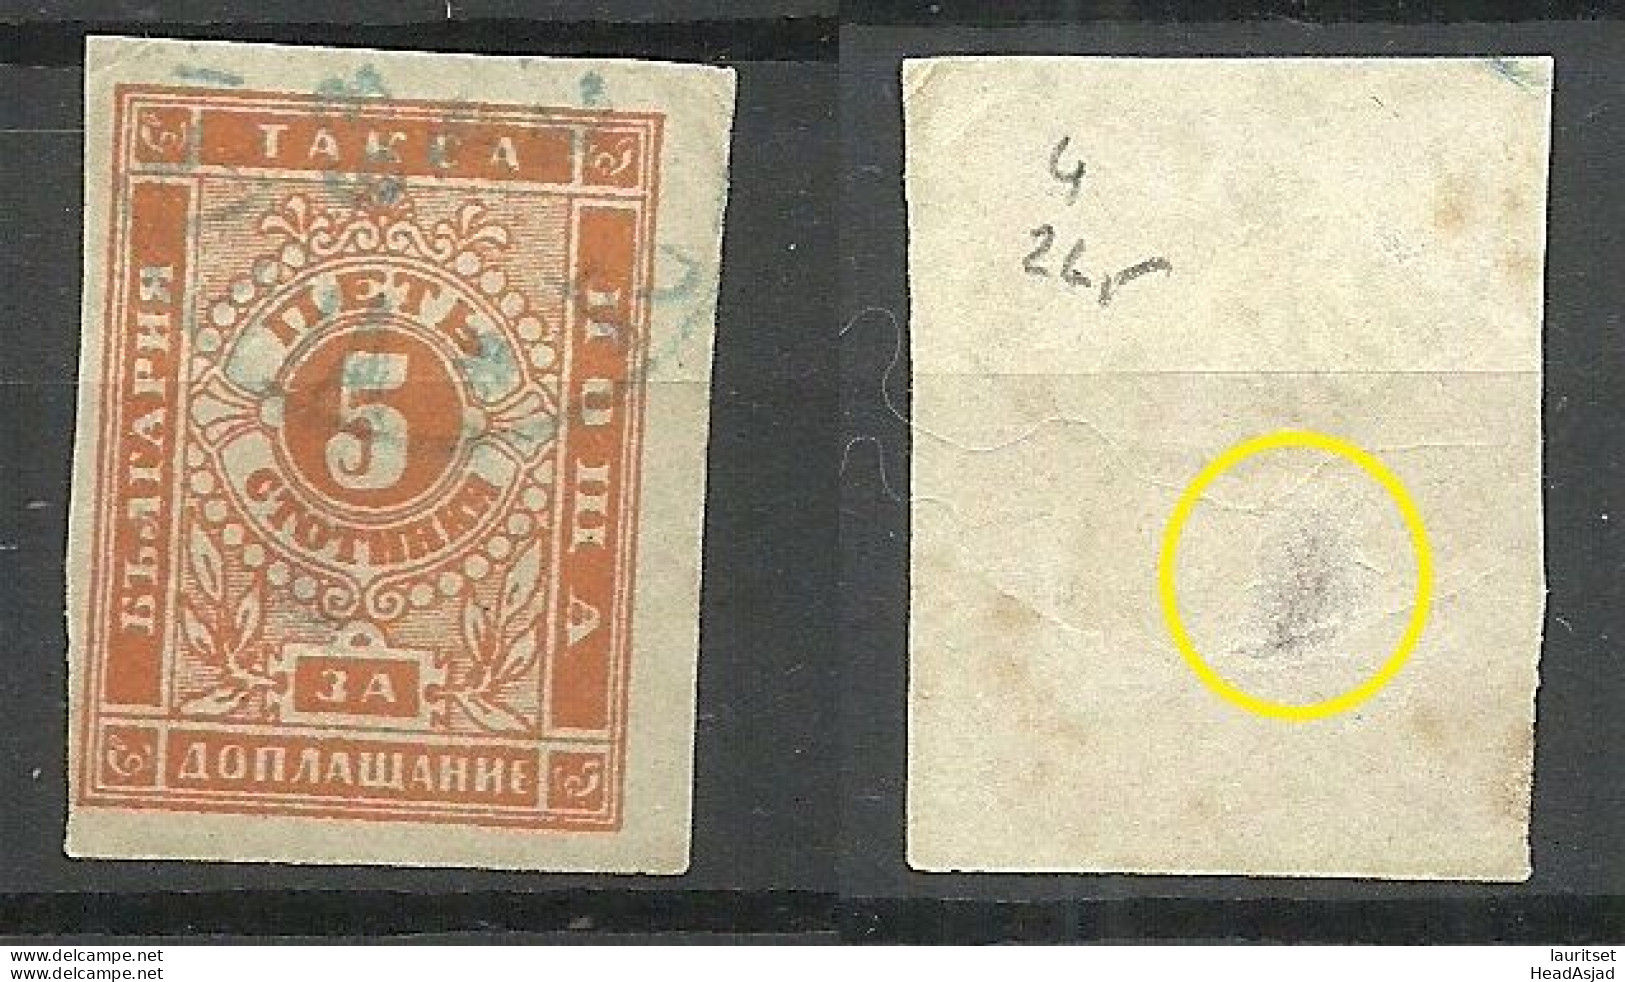 BULGARIA Bulgarien 1885/86 Michel 4 O Portomarke Postage Due Taxe NB! Thin Spot! - Portomarken